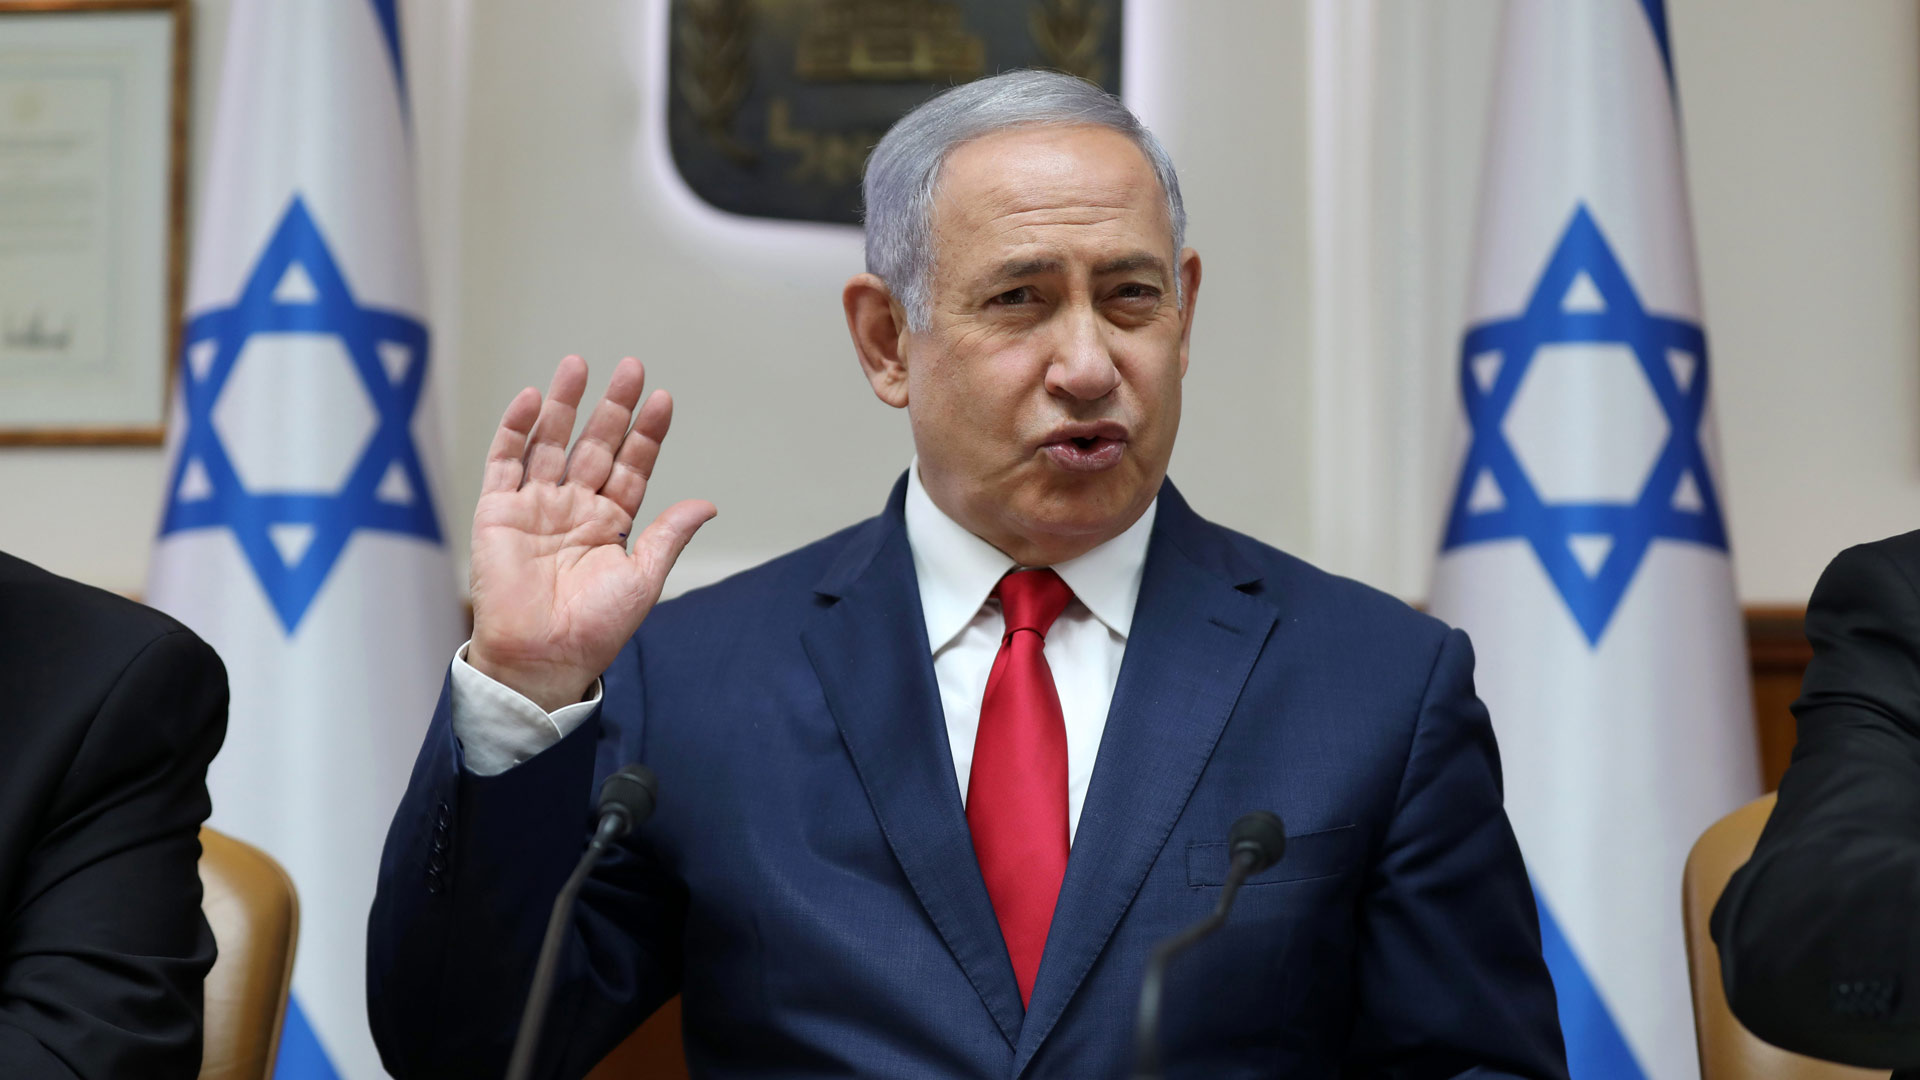 Netanyahu promete que ninguna colonia israelí será desmantelada en Cisjordania